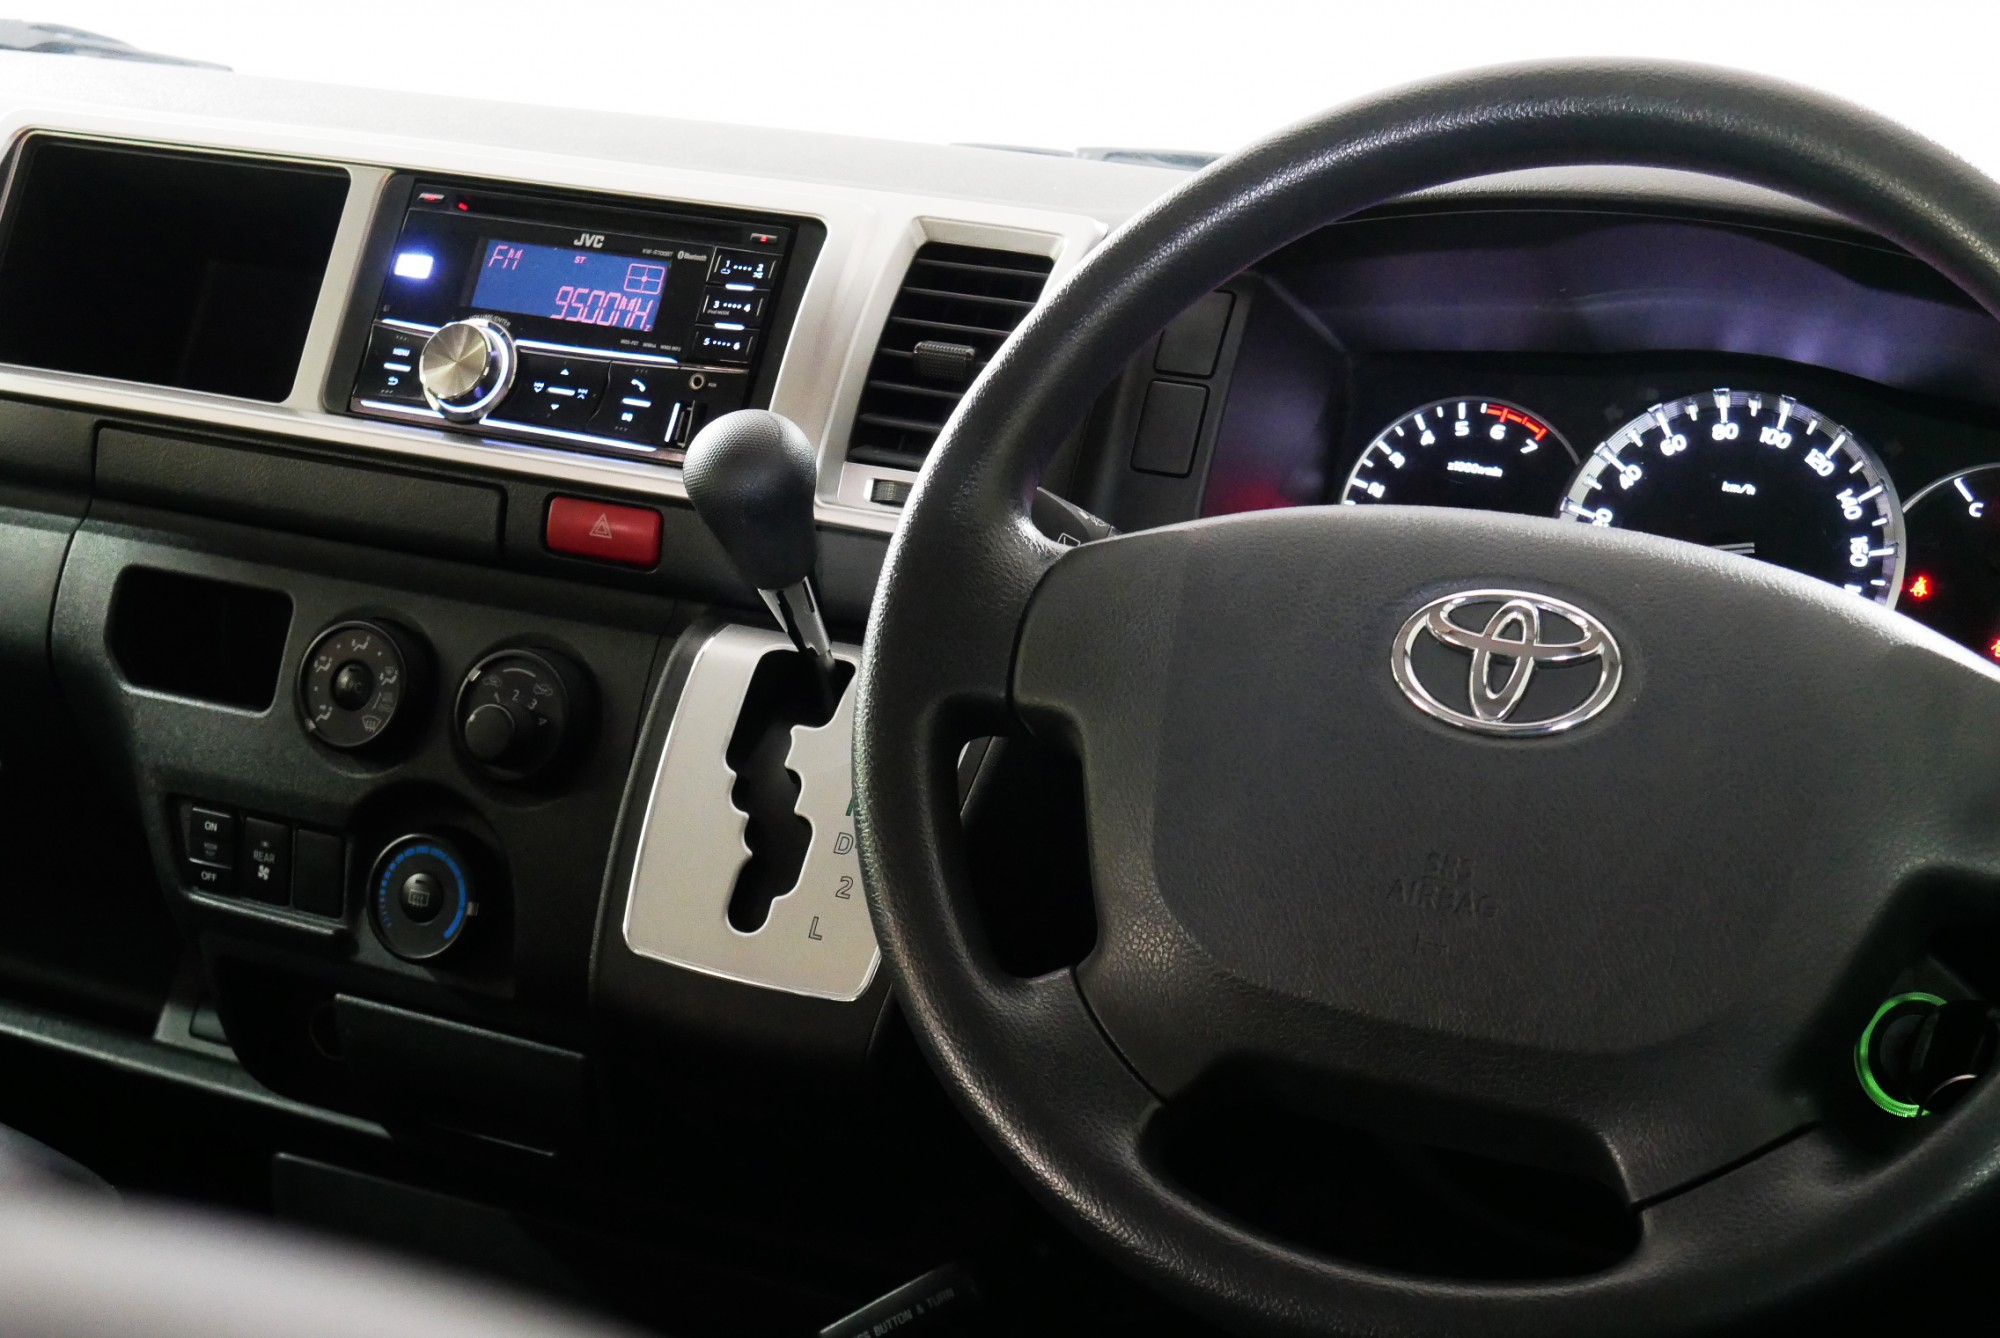 Toyota VENTURY 2.7 G ปี 2015 สีขาว